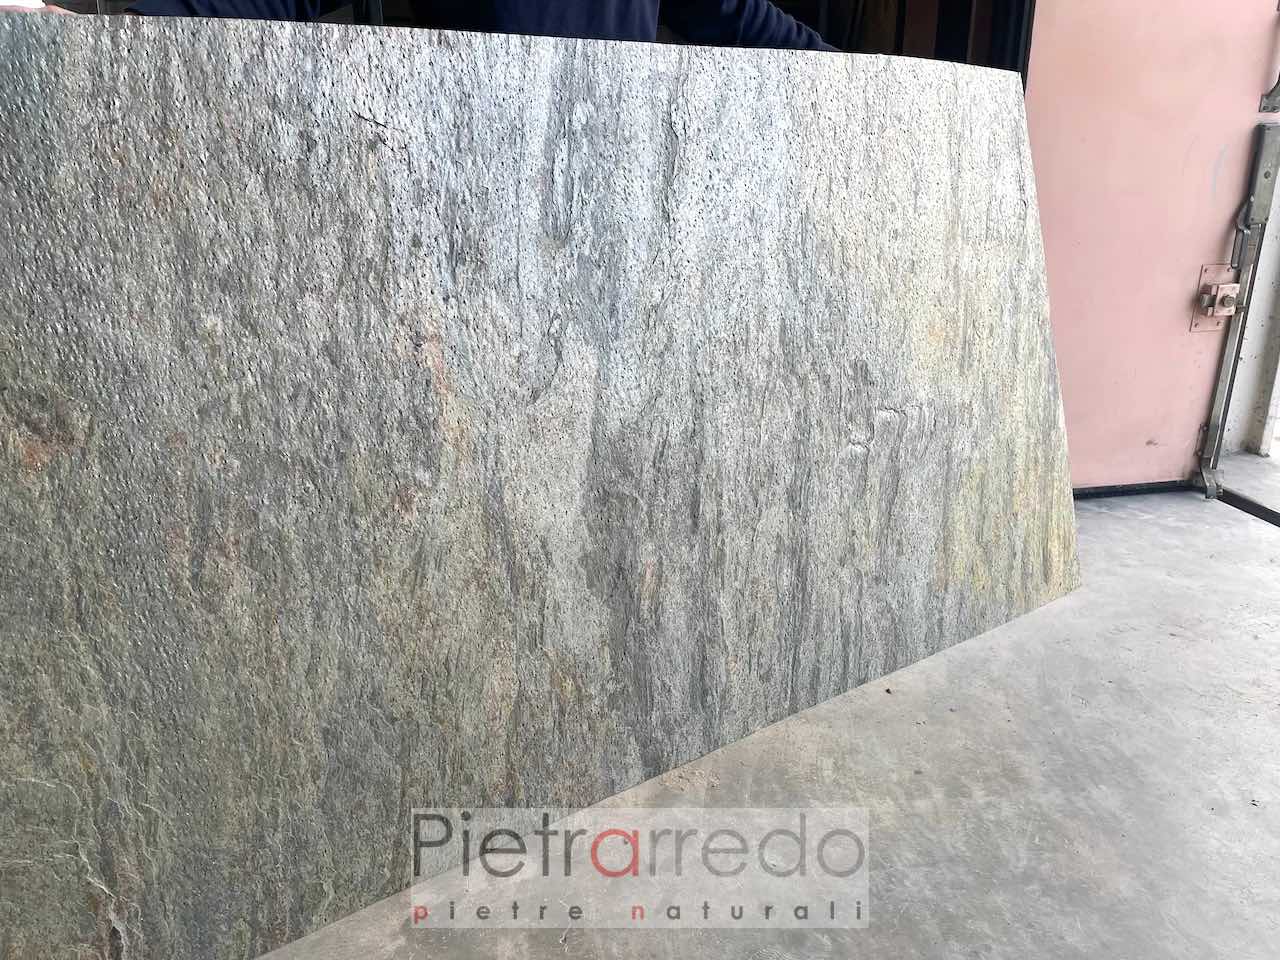 flexible stone sheet Jeera green 122x244cm price by pietrarredo